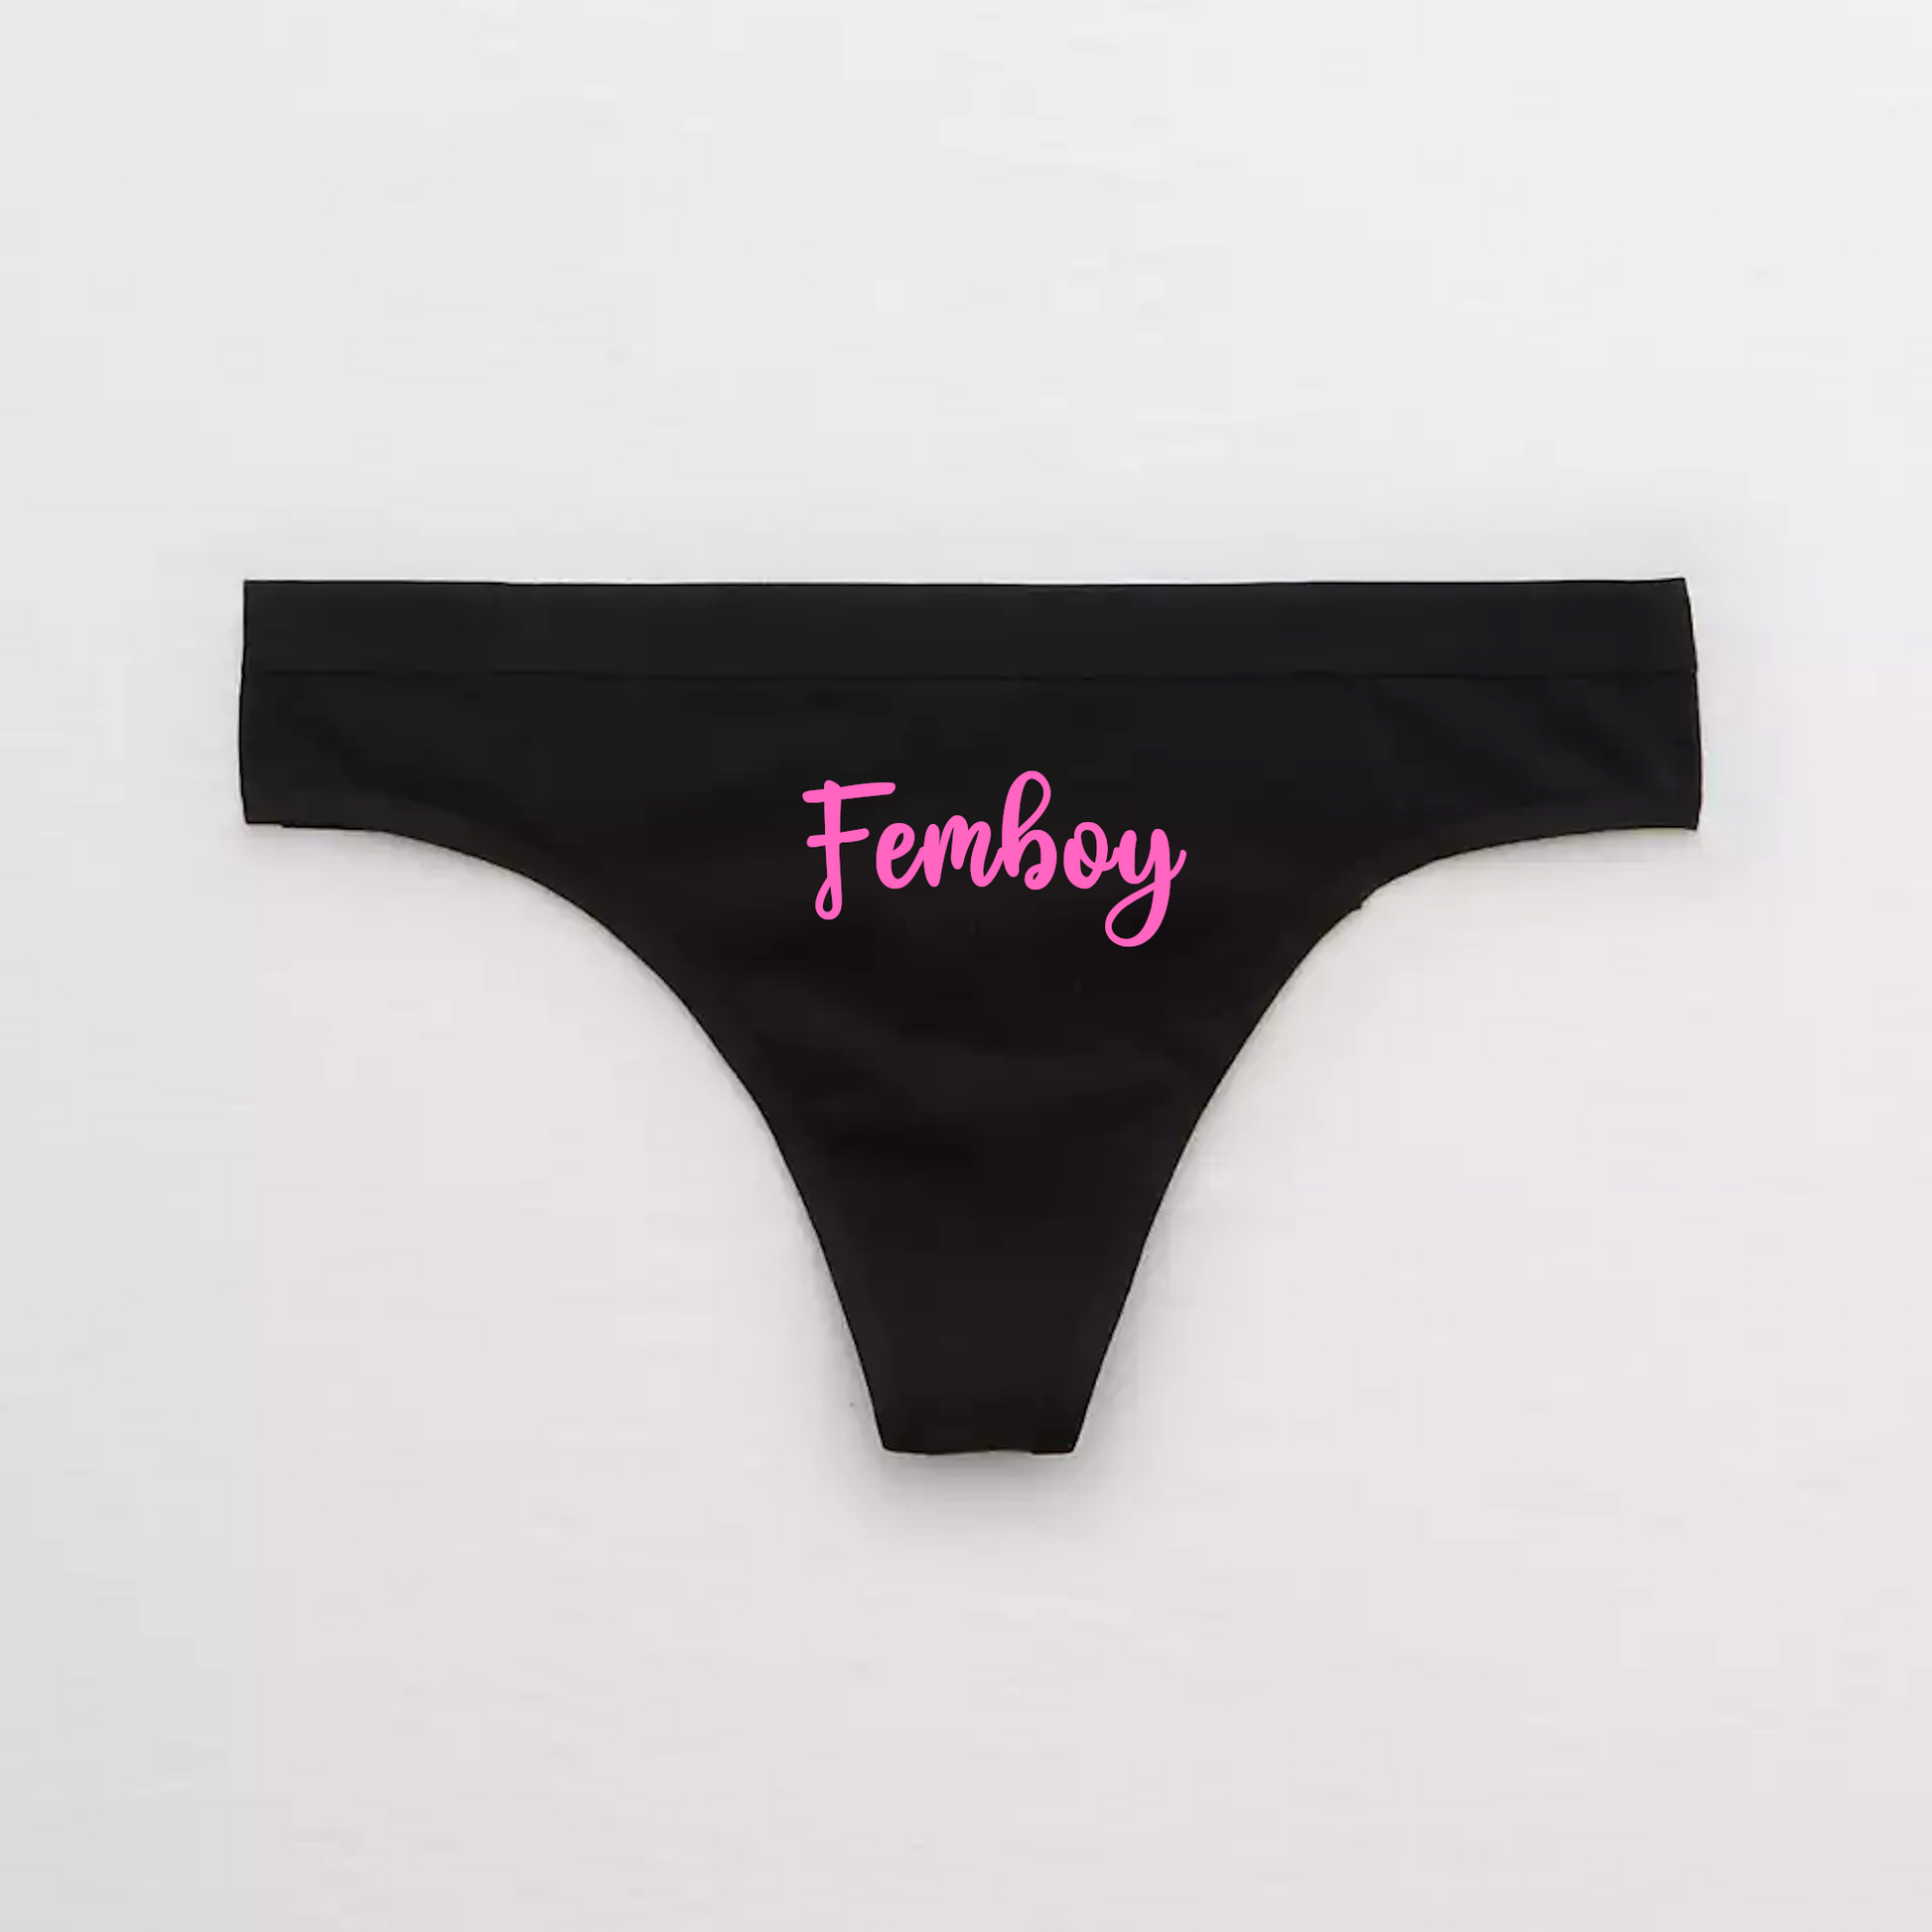 3-Pack Femboy Lingerie Set: See-Through Panties for Sissy Men